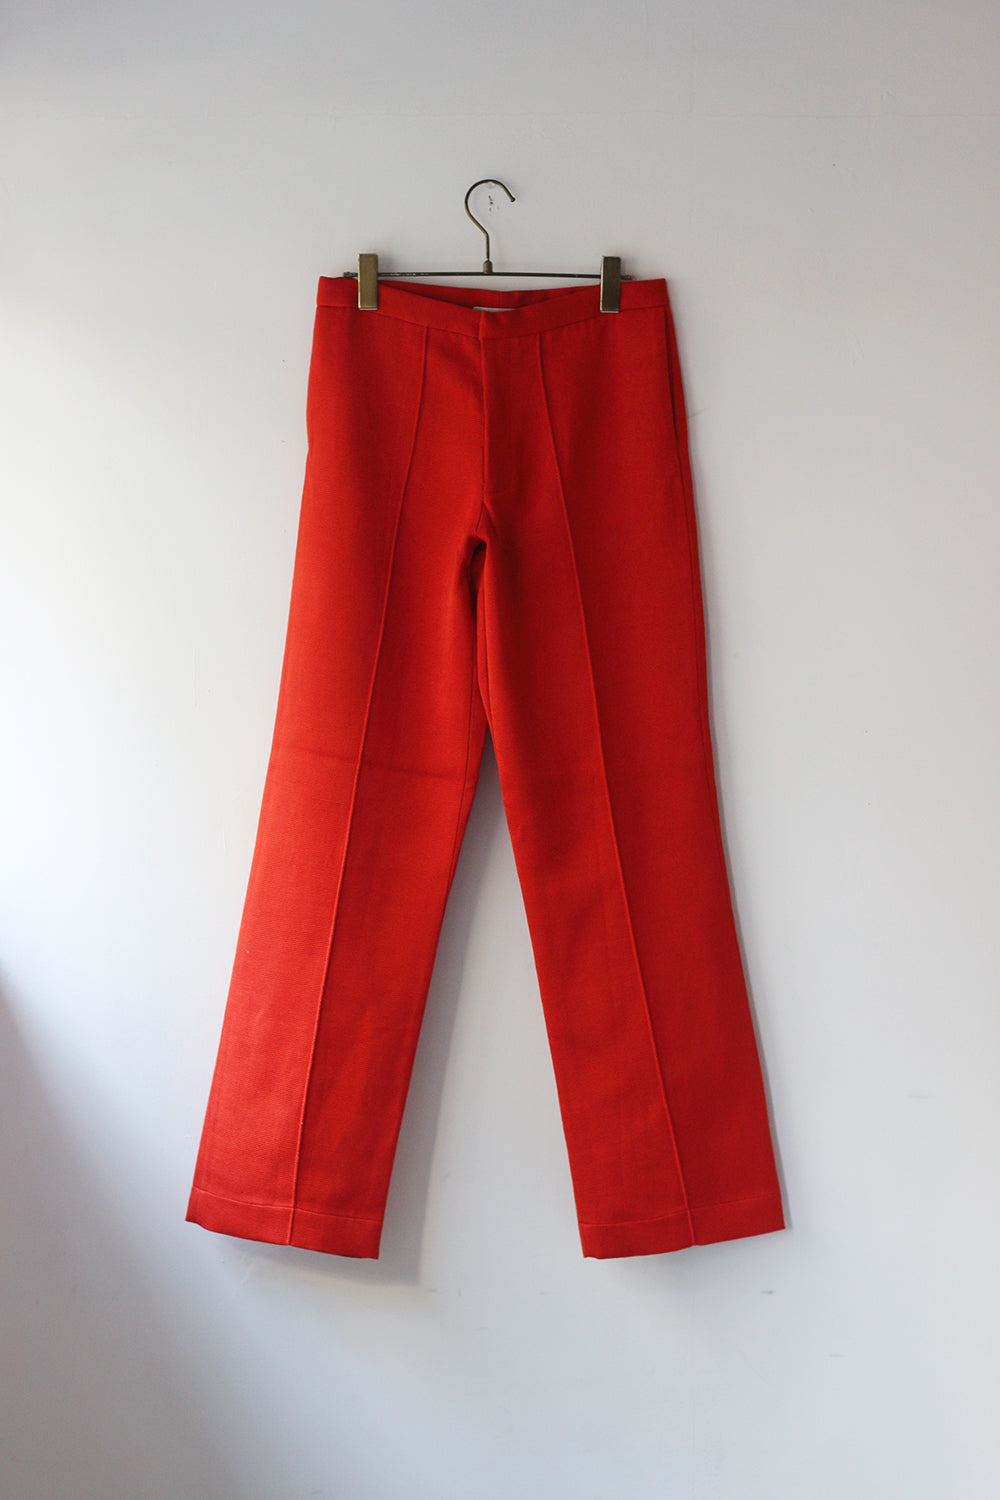 charrita "pantalon fino" (red)